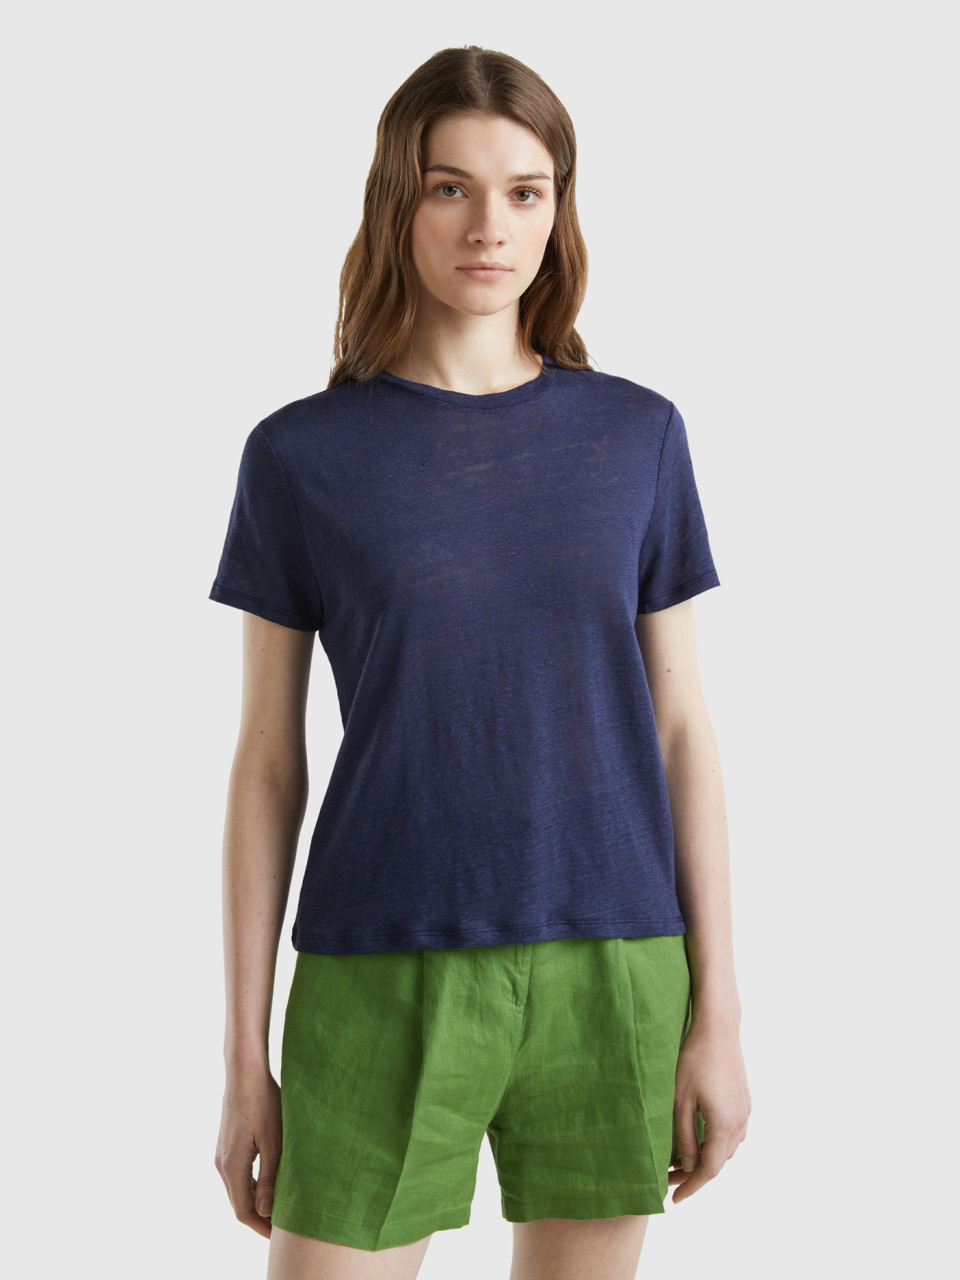 Benetton, Crew Neck T-shirt In Pure Linen, Dark Blue, Women